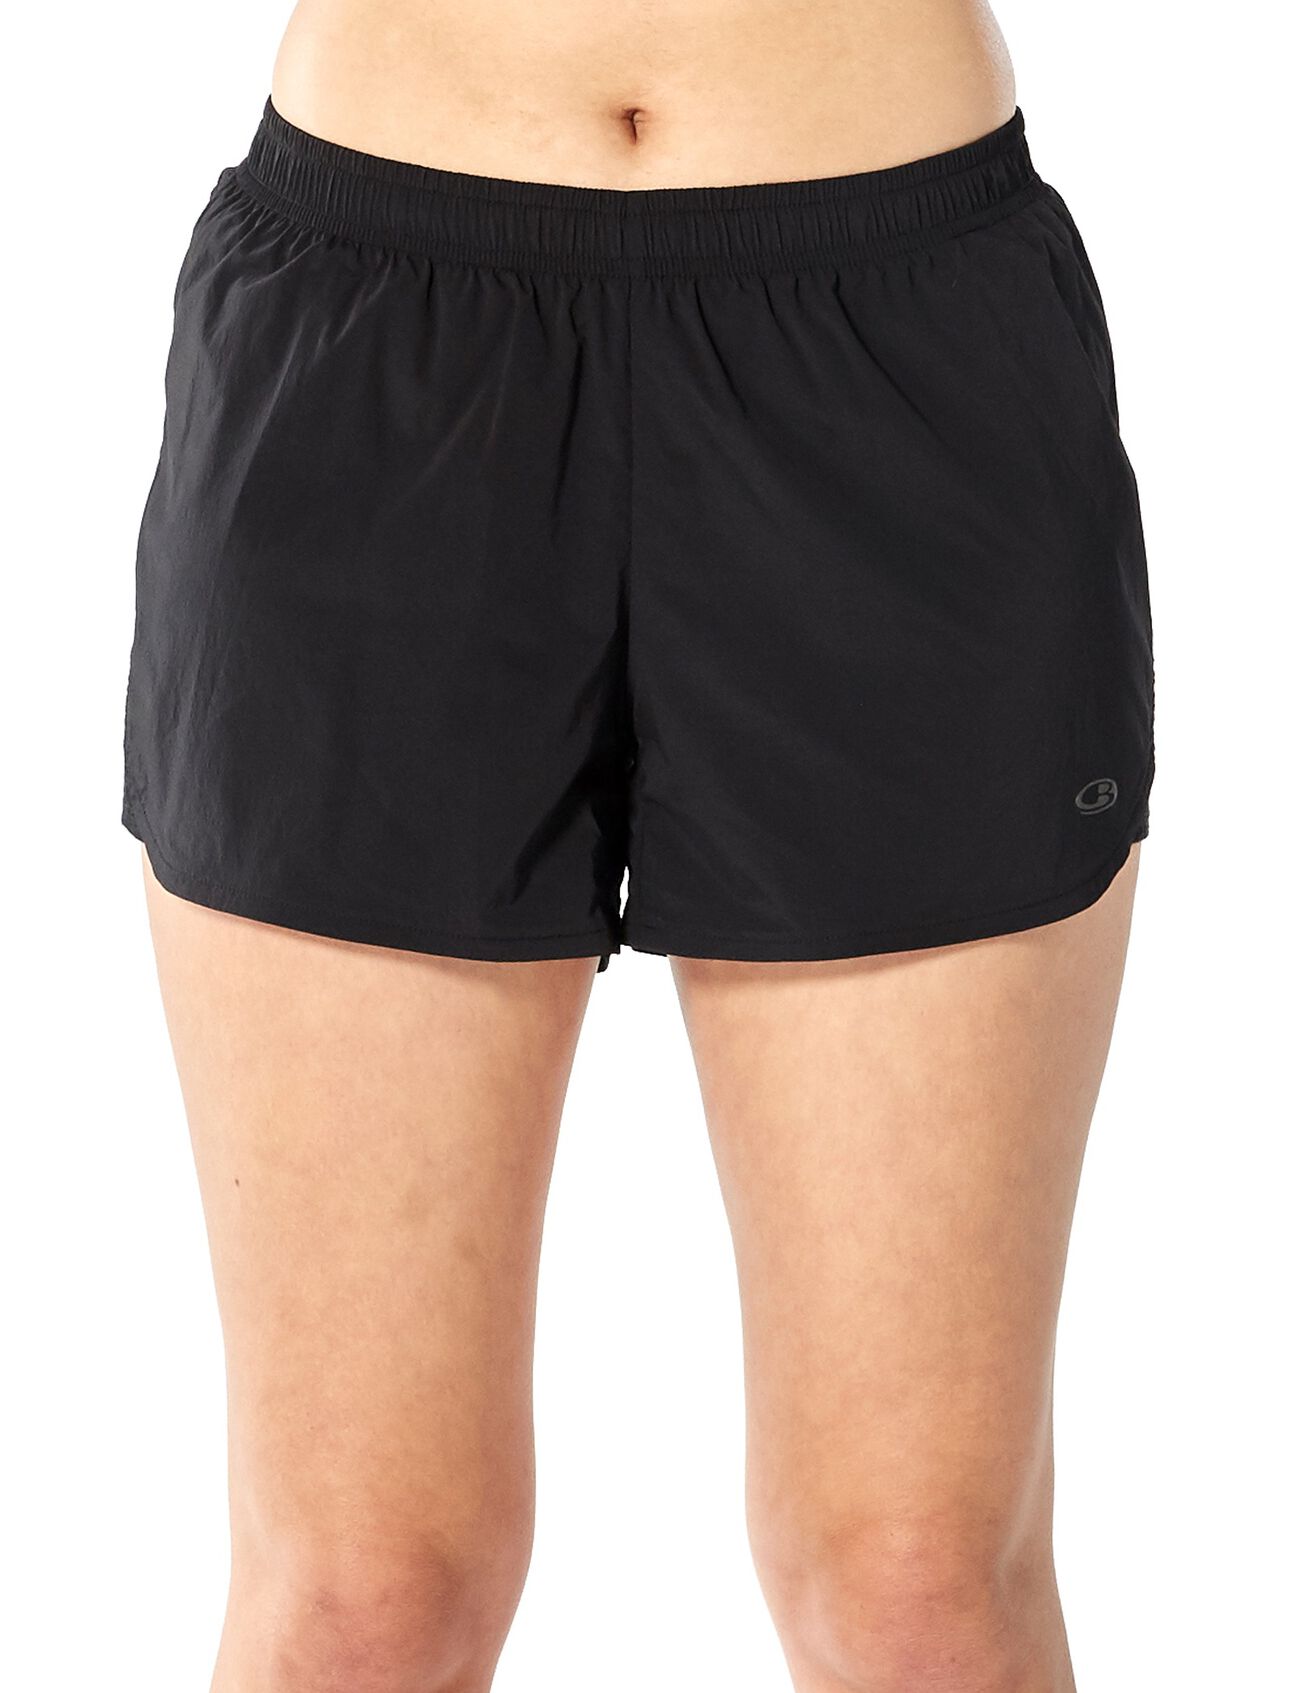 Cool-Lite™ Merino Impulse Running Shorts